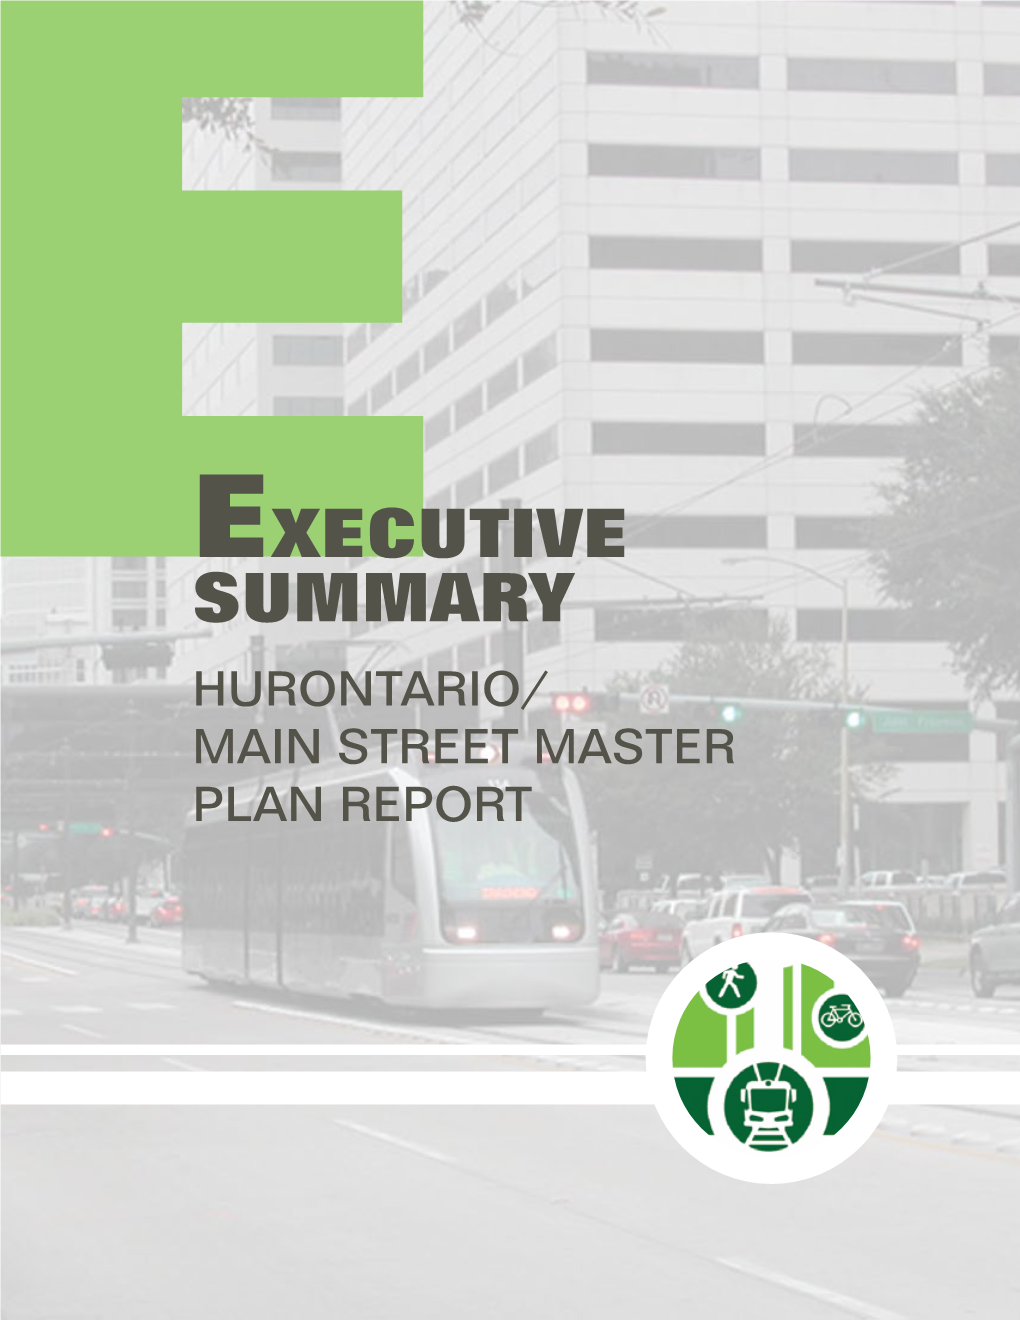 Executive Summary Ehurontario/ Main Street Master Plan Report Executive Summary